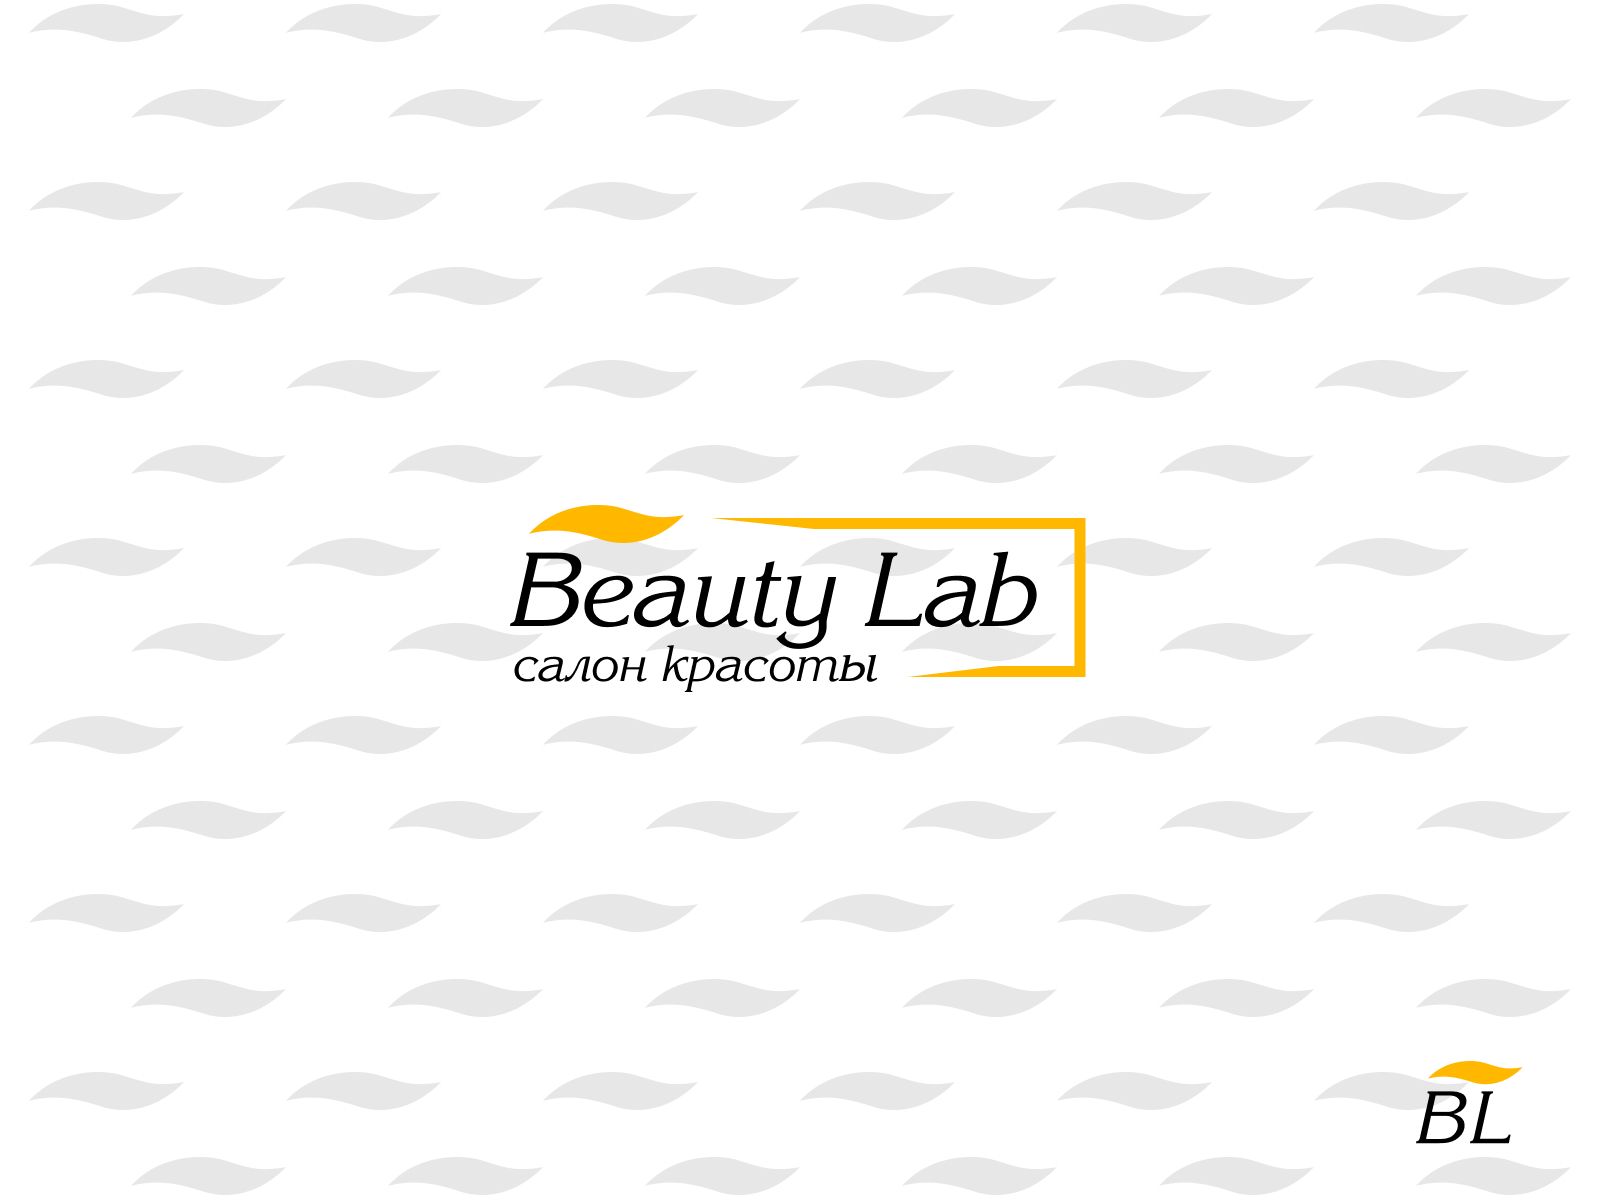 Beauty Lab Logo By Alexander Ladygin On Dribbble